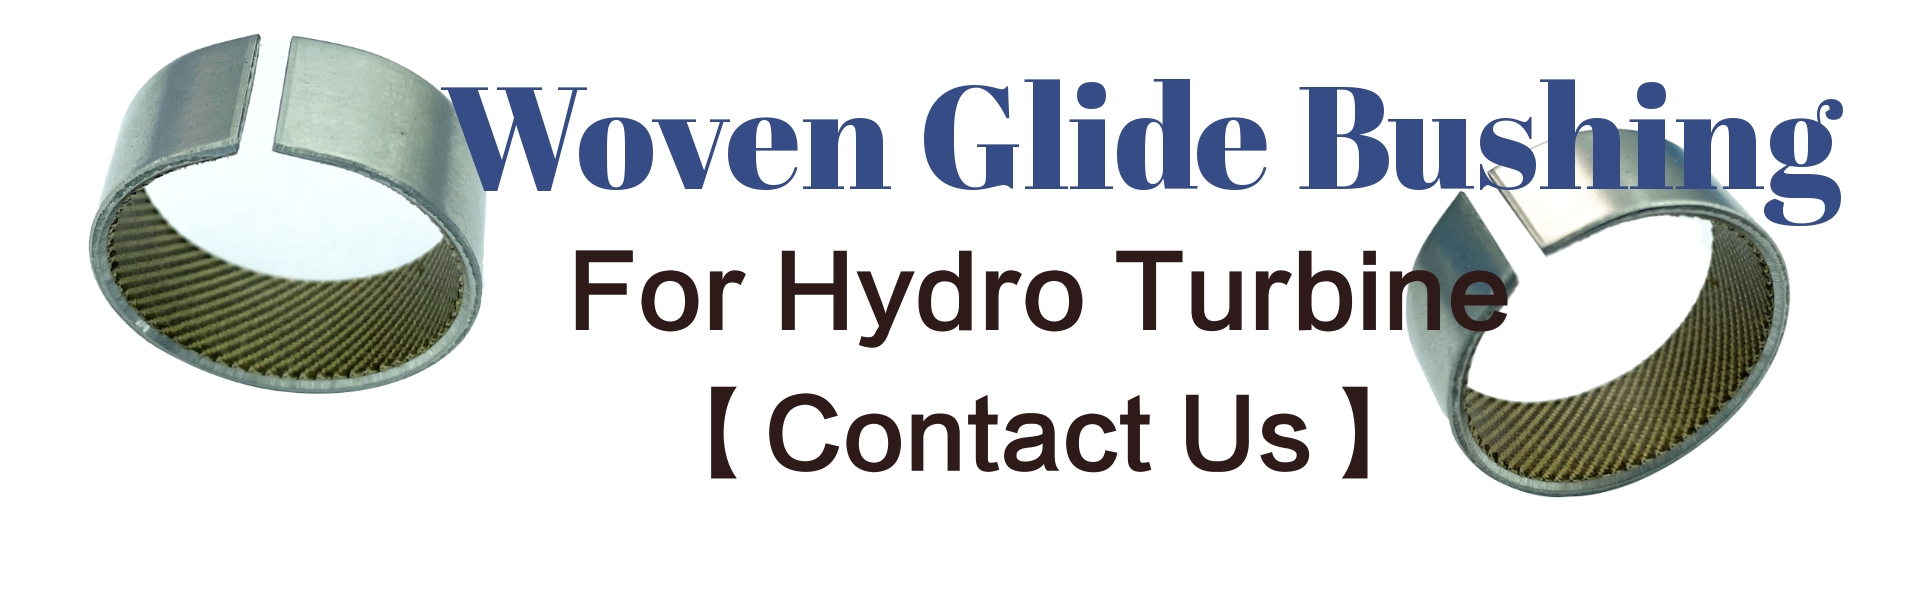 Woven Glide Bushing For Hydro Turbine